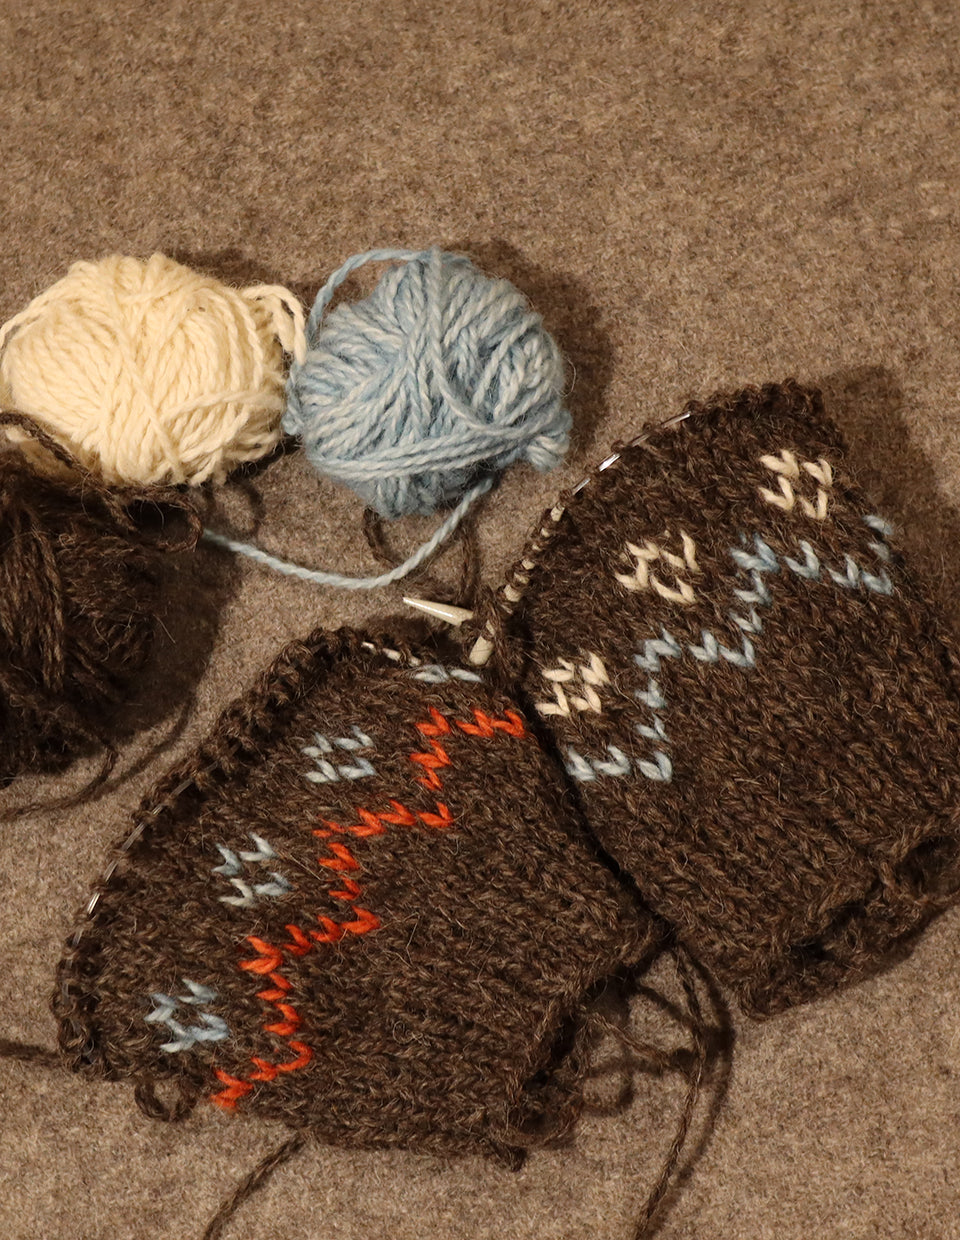 RAKEL, sweater in Old Norse wool, knitting kit